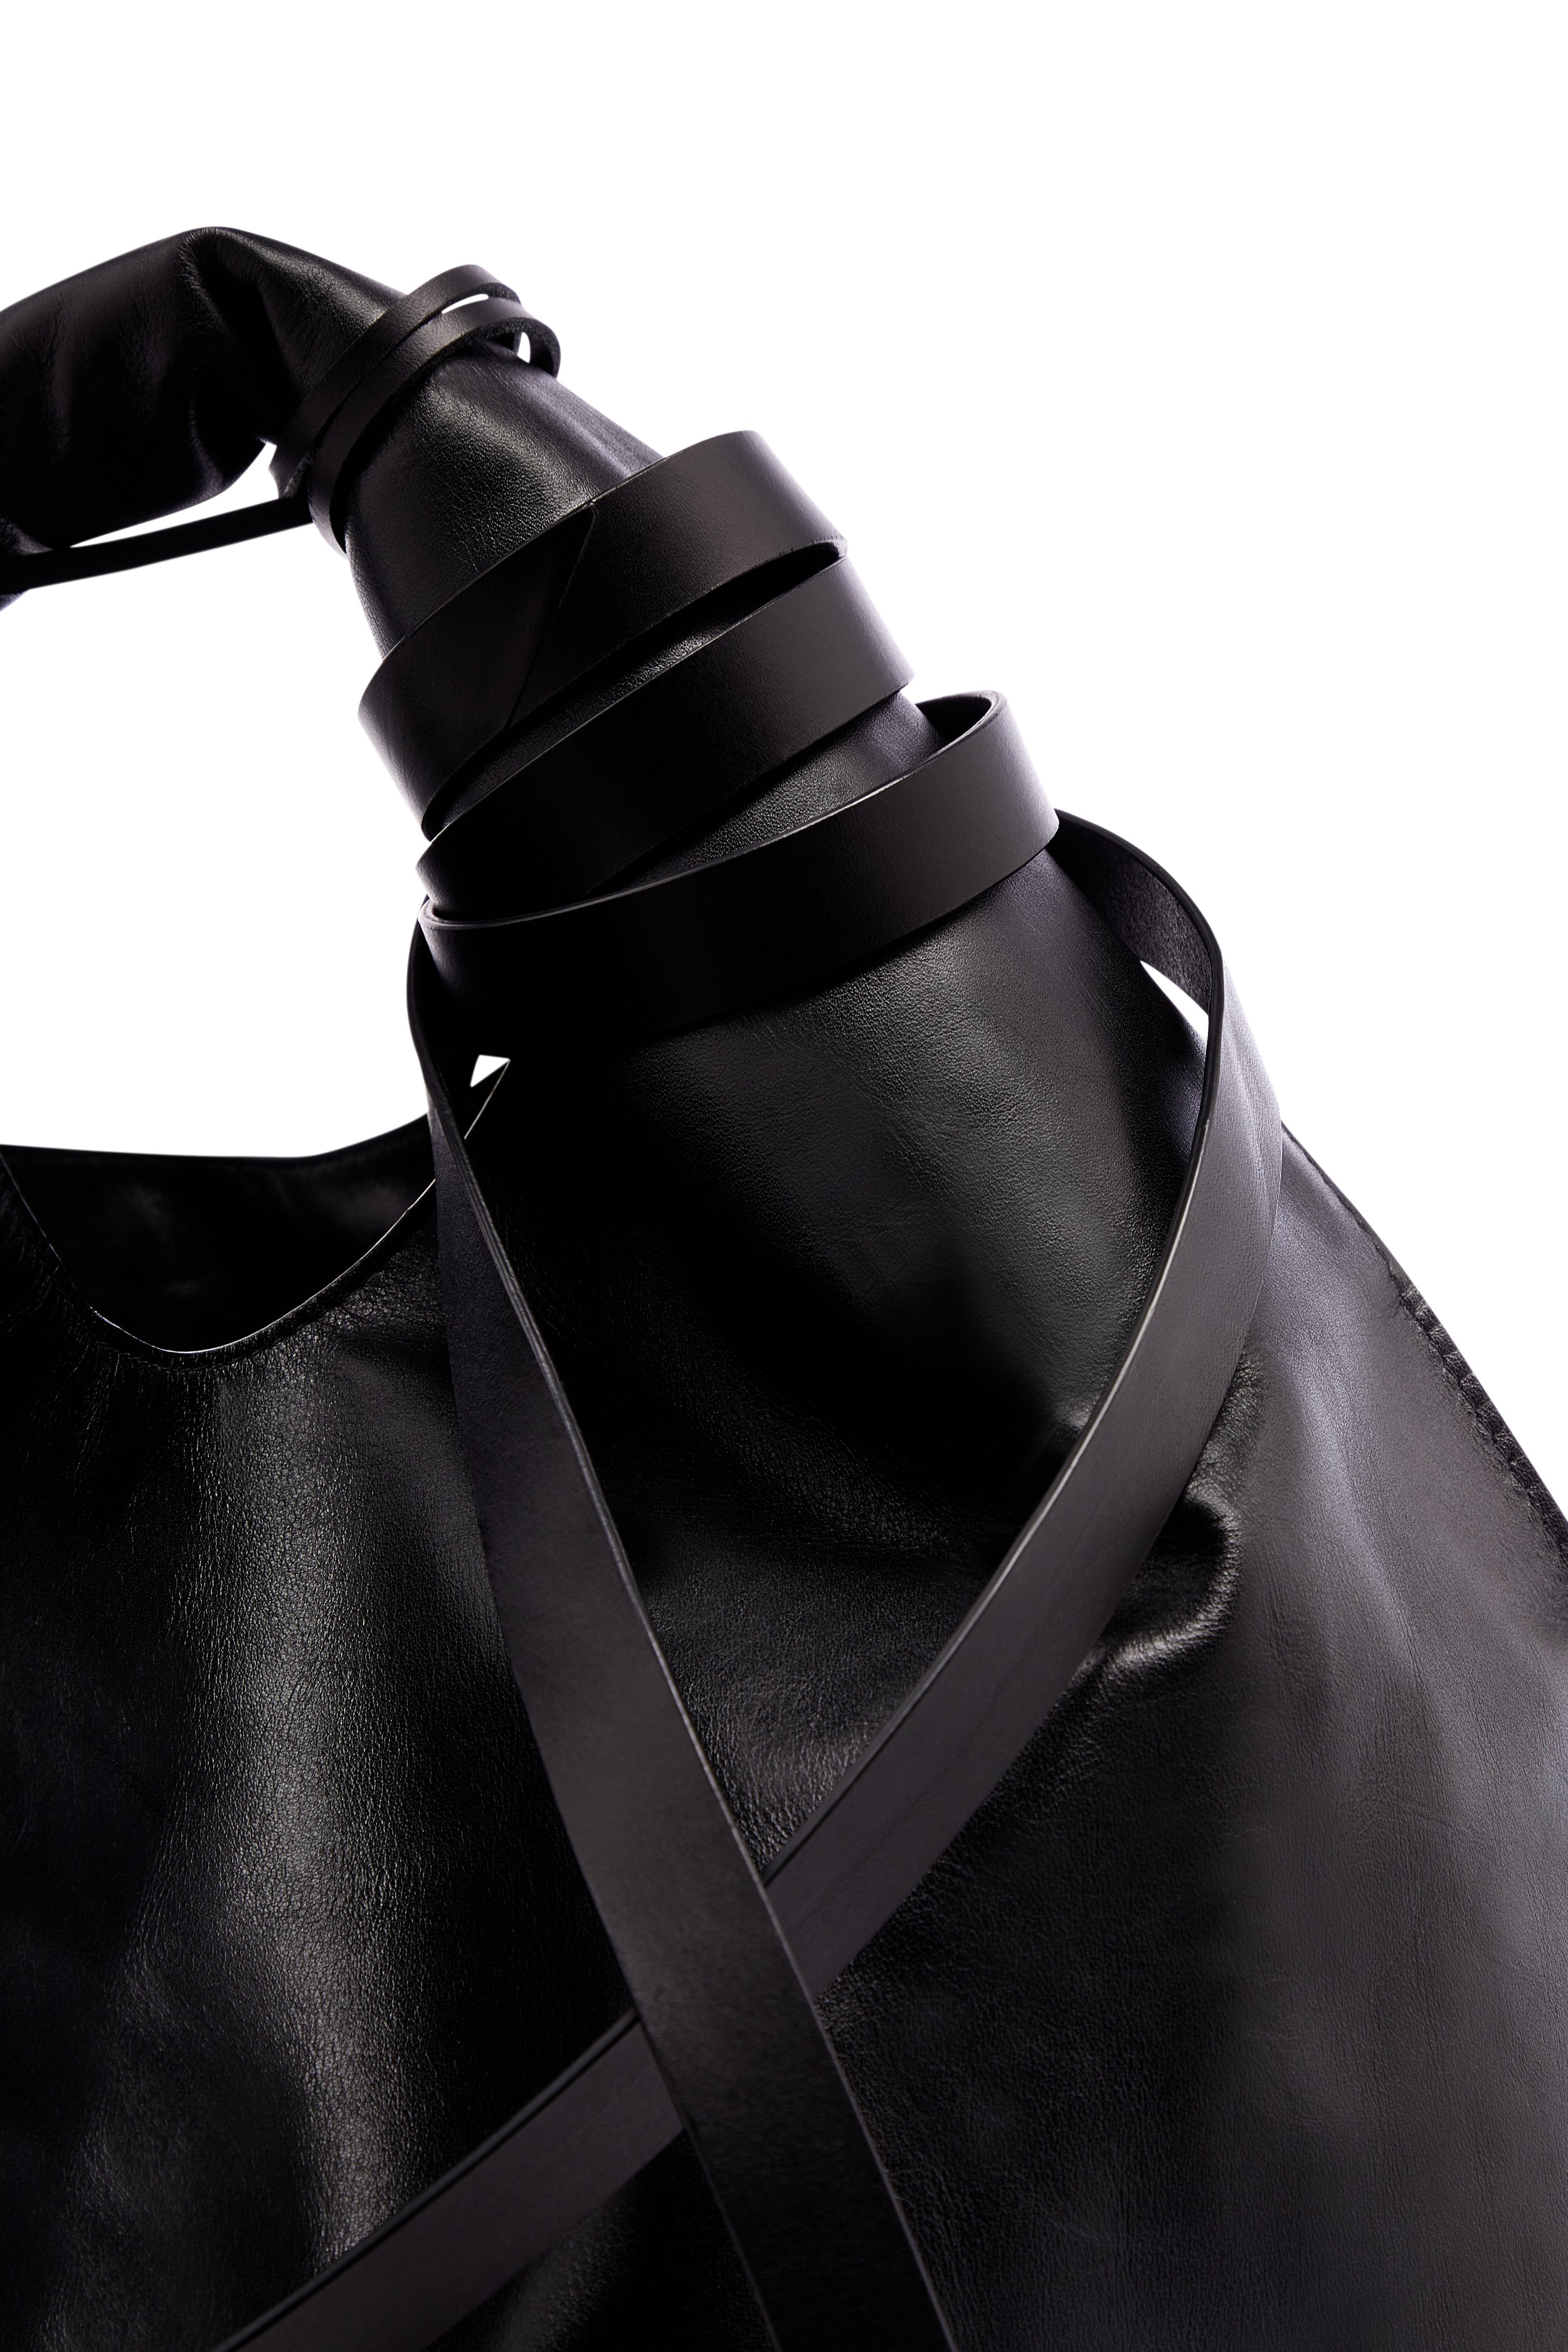 Kikiito-houseofito-sanagi-black-large-soft-leather-tote-luxury-handbag-bag-made-in-England-Uk-craftsmanship-handmade-avantgarde-Japanese-London-accessories-minimalist-design-sustainable-slow-fashion-brand-one-of-a-kind.jpg